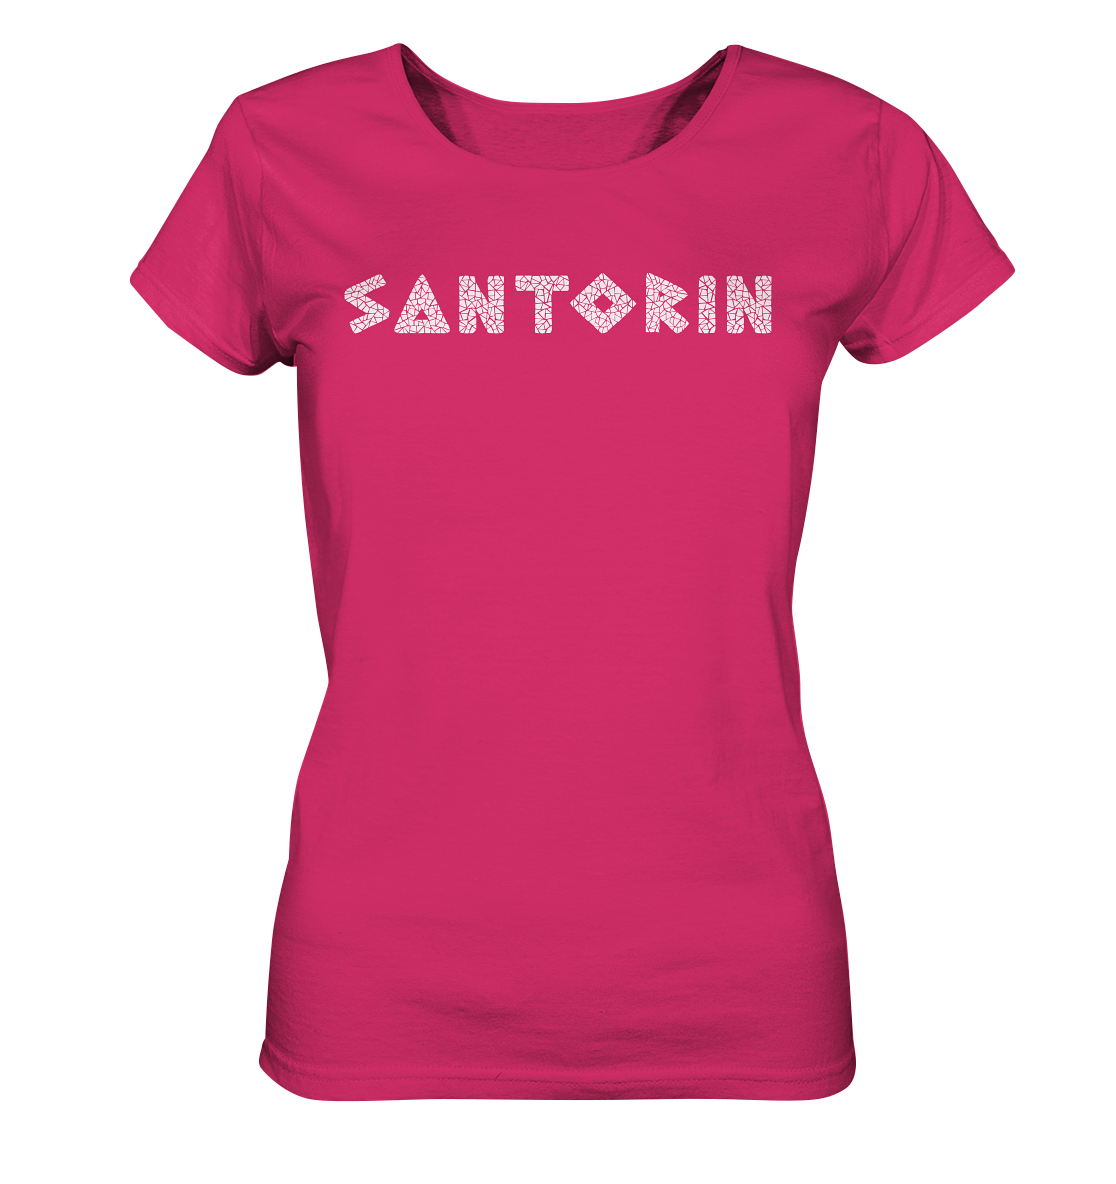 Santorini Mosaic - Ladies Organic Shirt